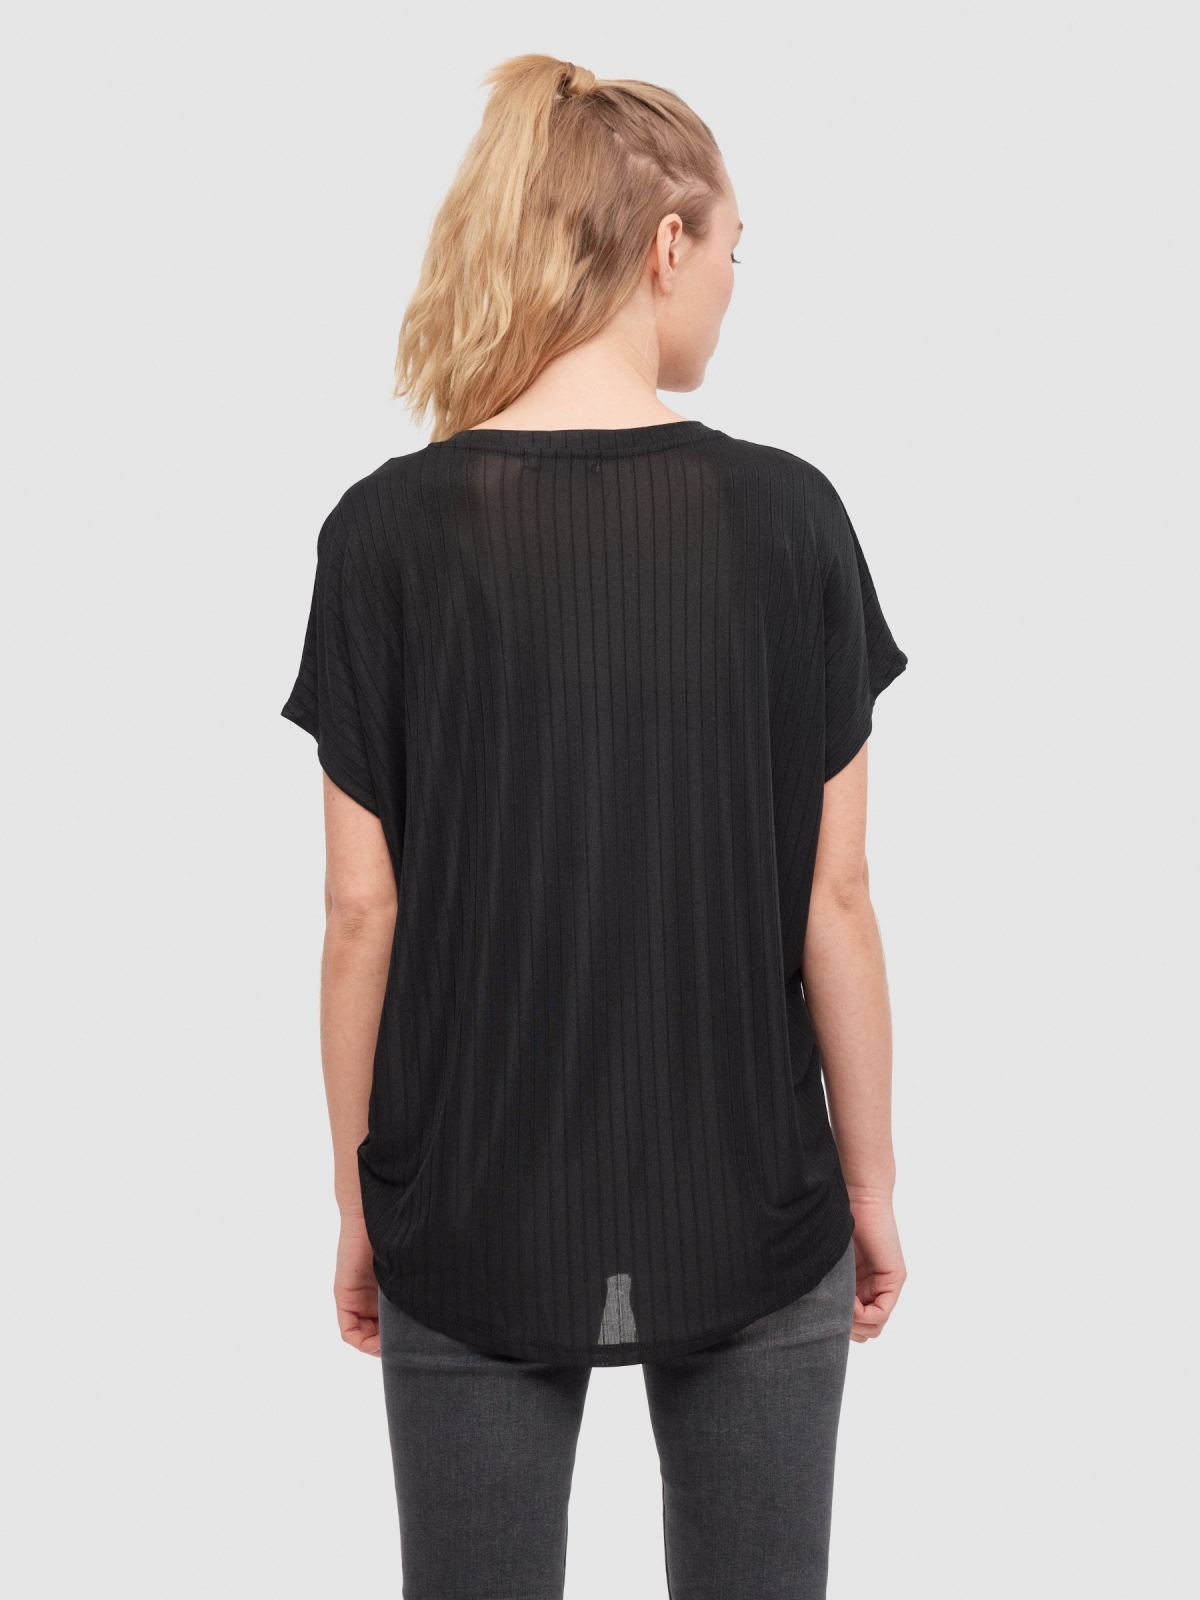 Rib asymmetrical hem T-shirt black middle back view